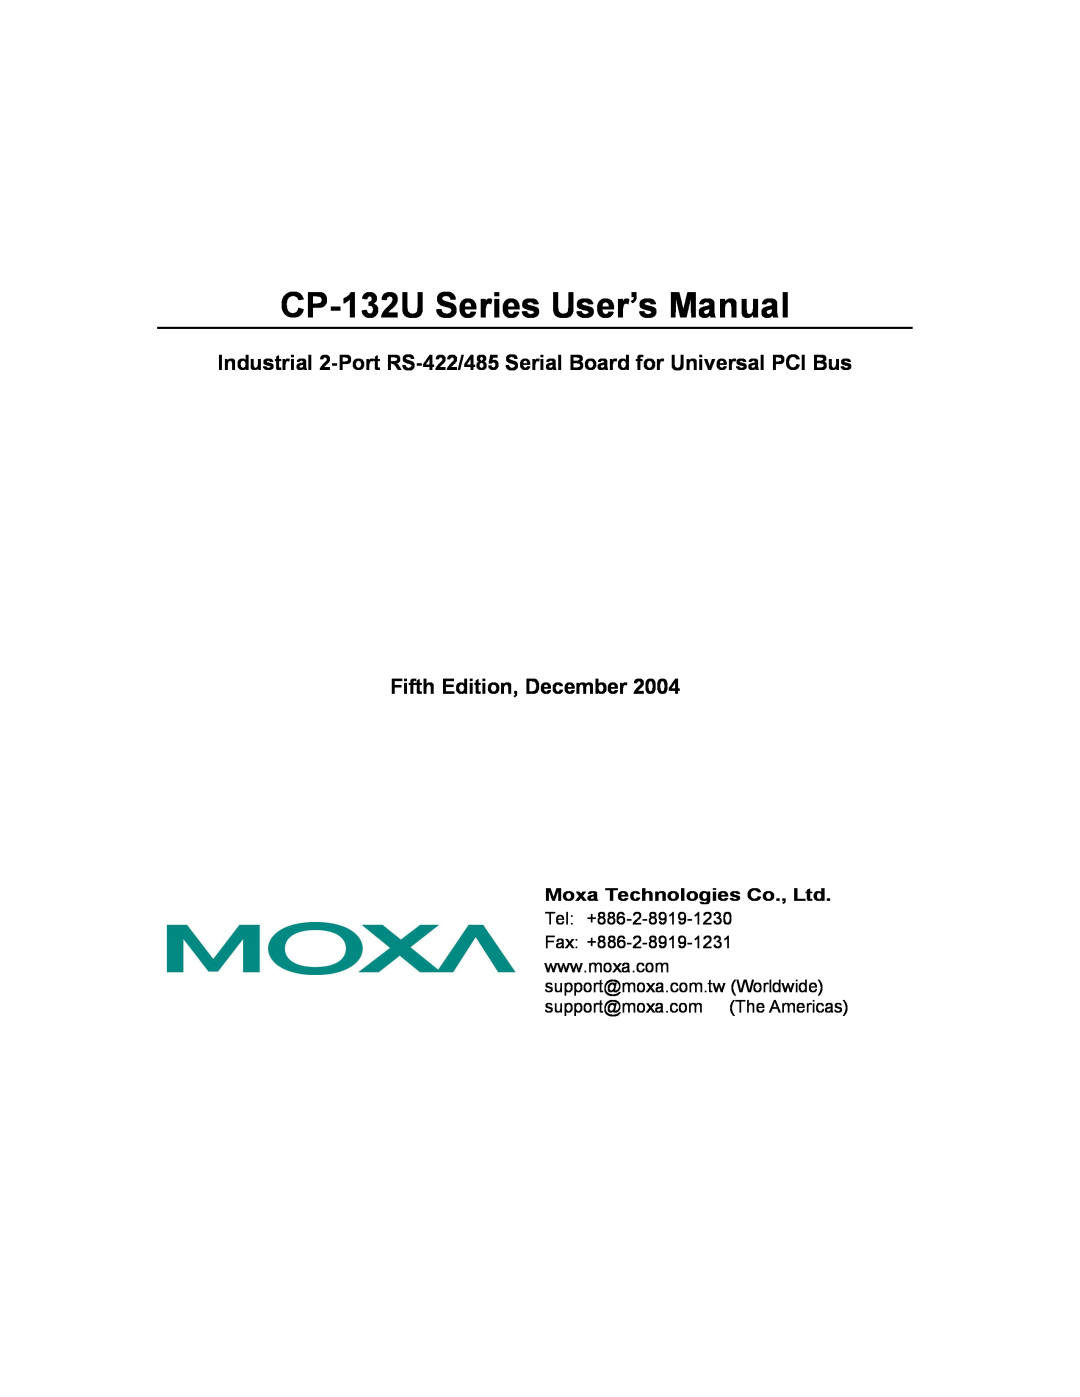 Moxa Technologies user manual CP-132U Series User’s Manual, Fifth Edition, December 